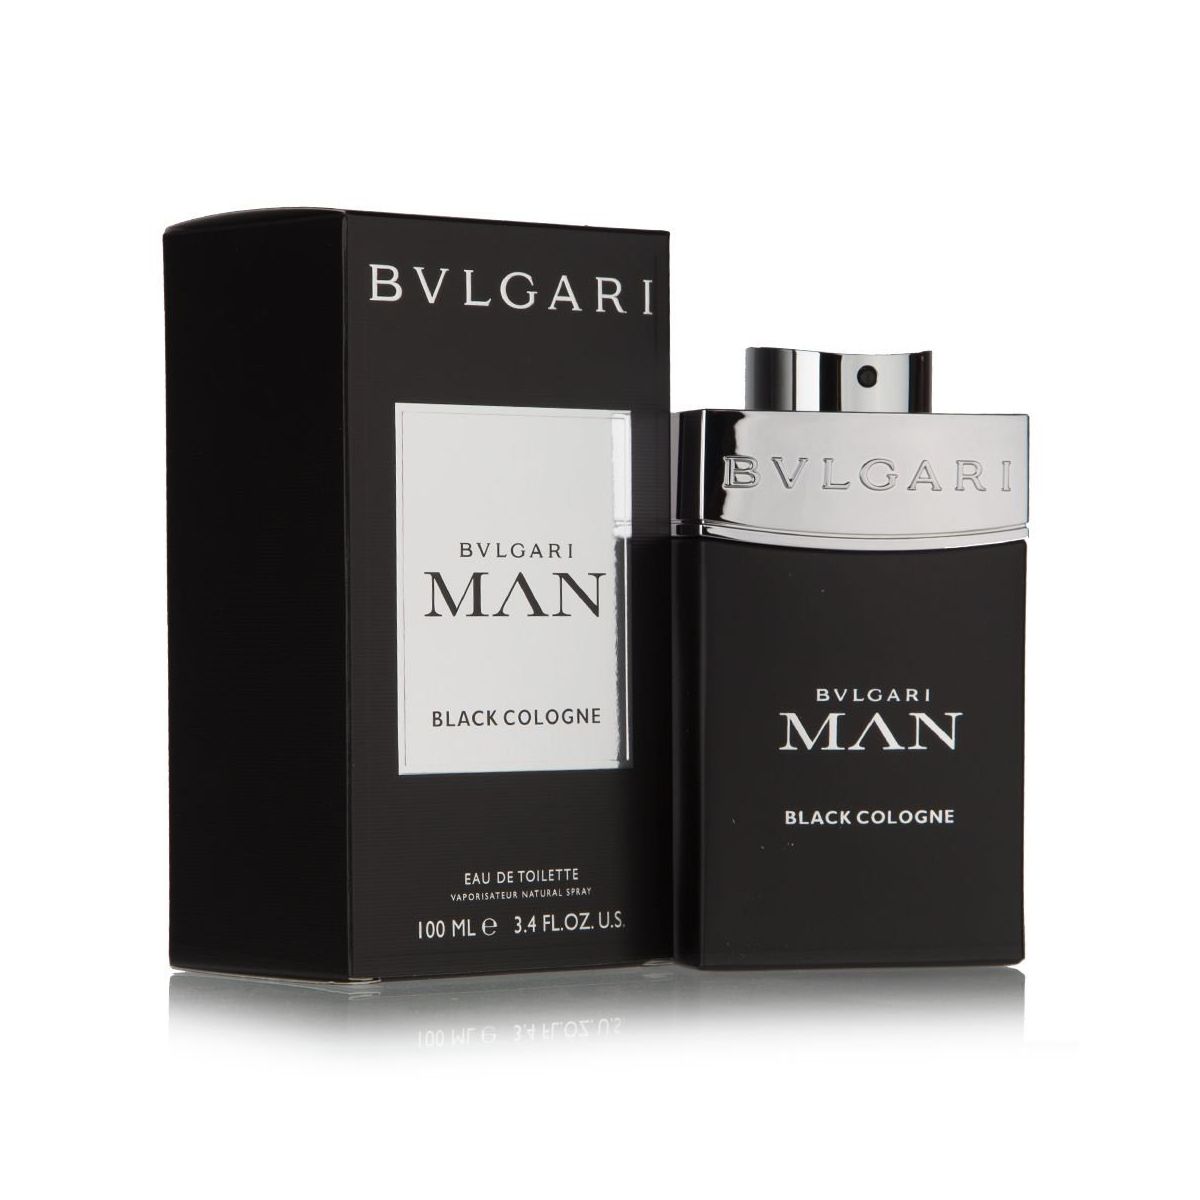 Blv EDT for Men by Bvlgari – Fragrance Outlet